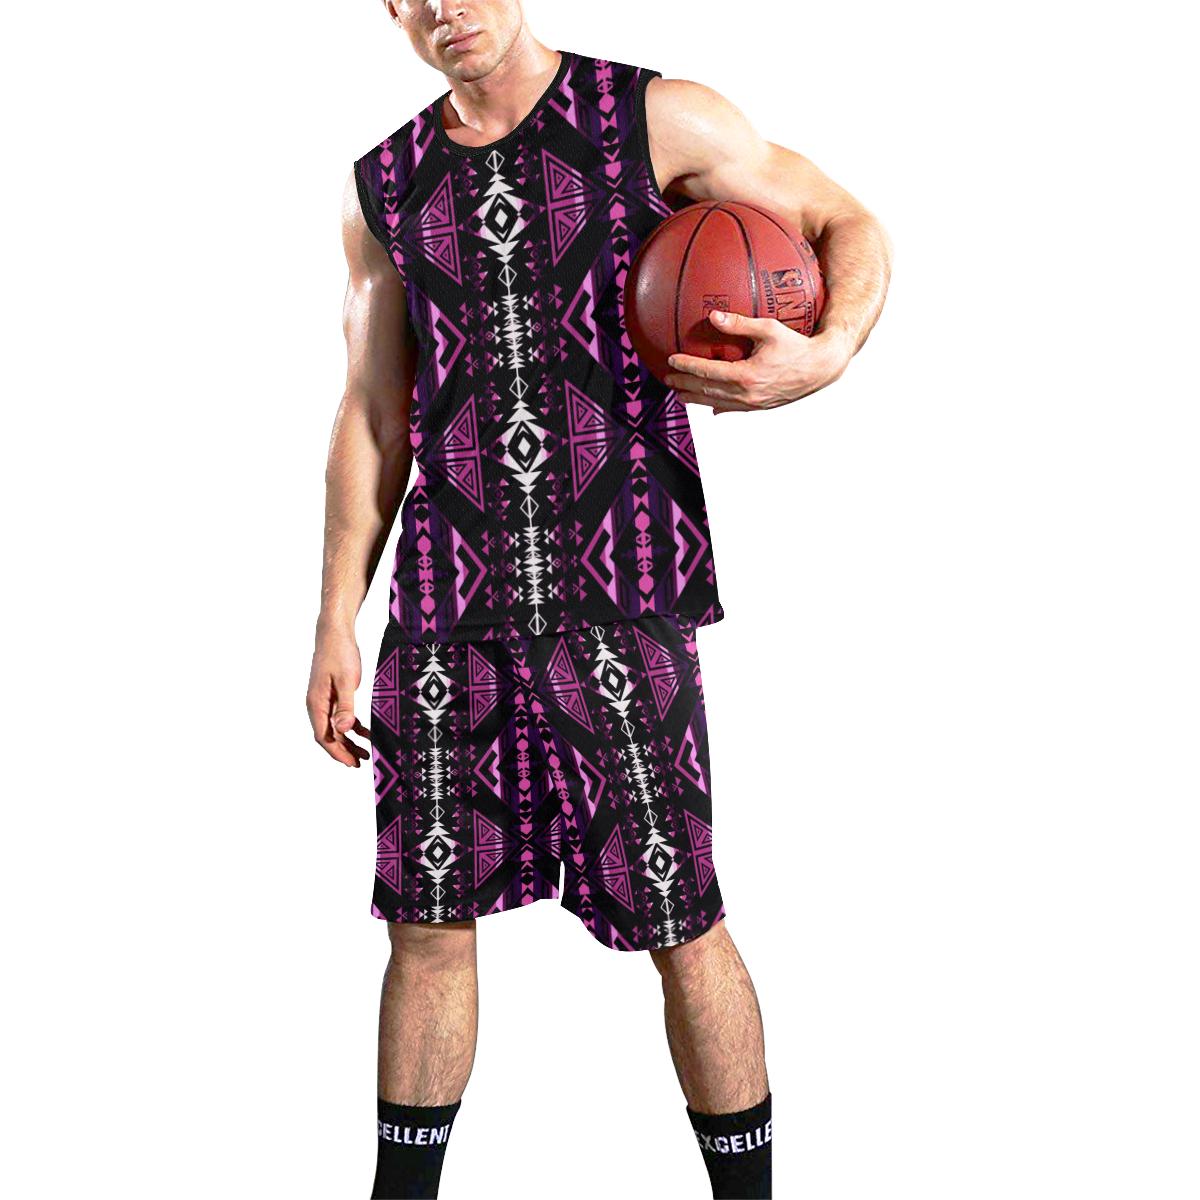 Upstream Expedition Moonlight Shadows All Over Print Basketball Uniform Basketball Uniform e-joyer 